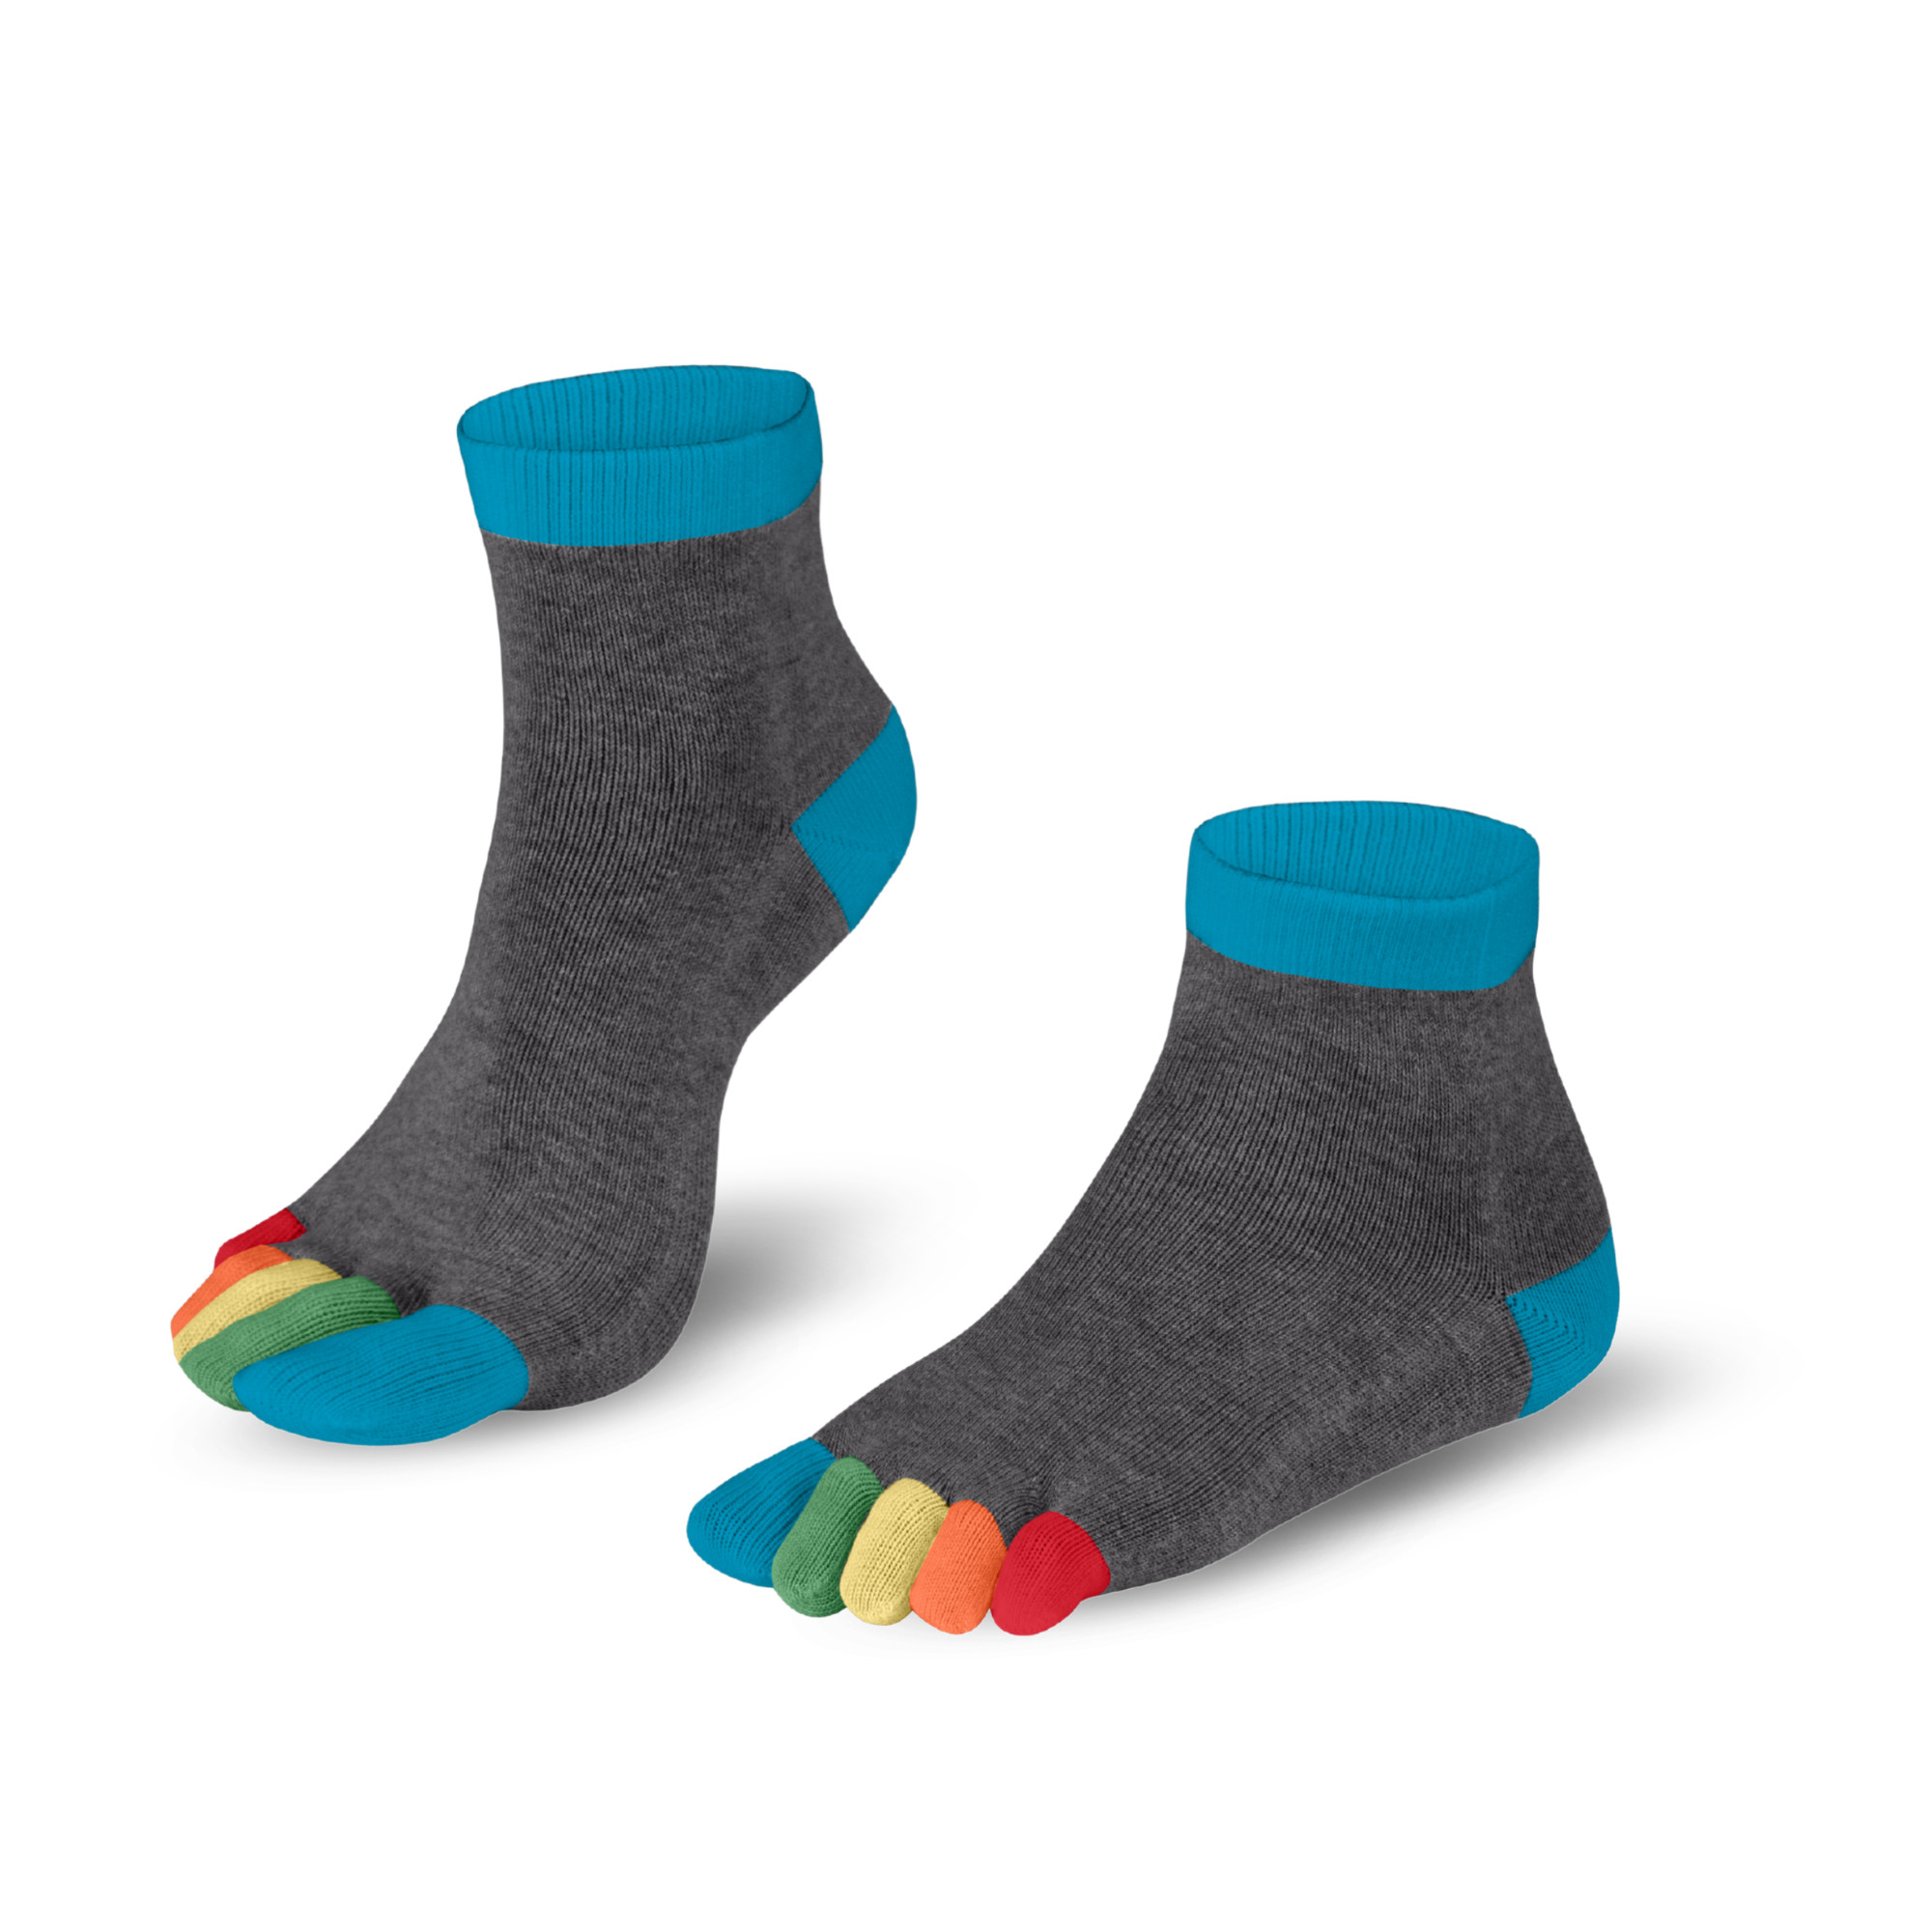 Knitido Rainbows short colorful toe socks - Knitido®